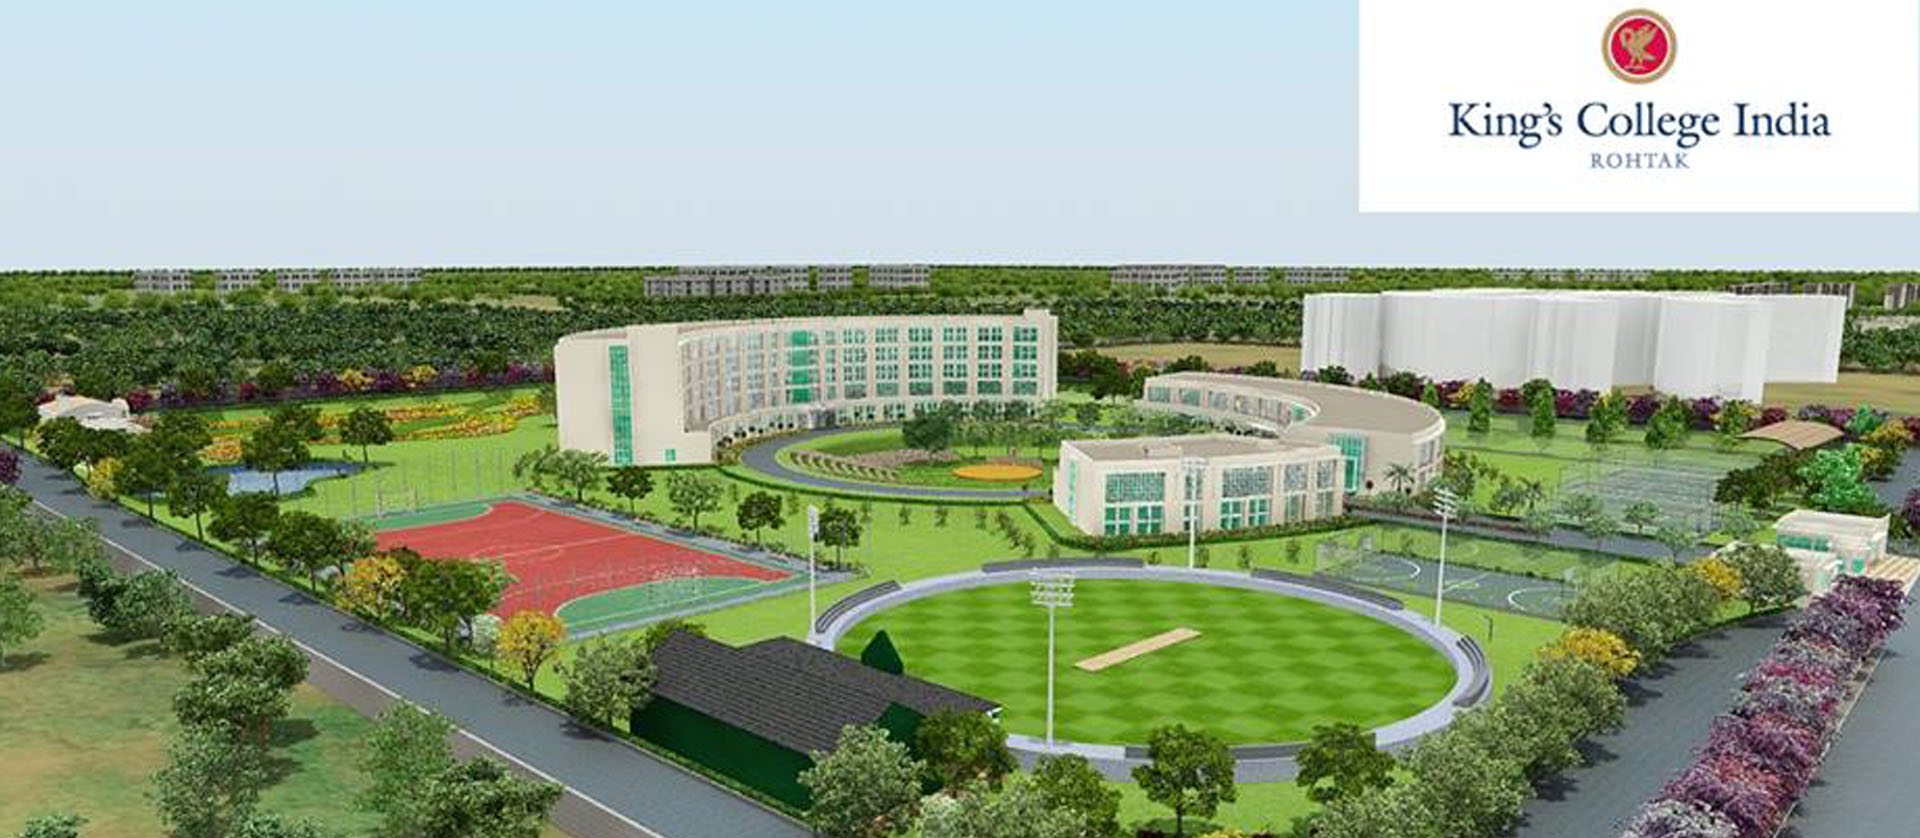 King’s College (Global Residential School): Rohtak, Haryana